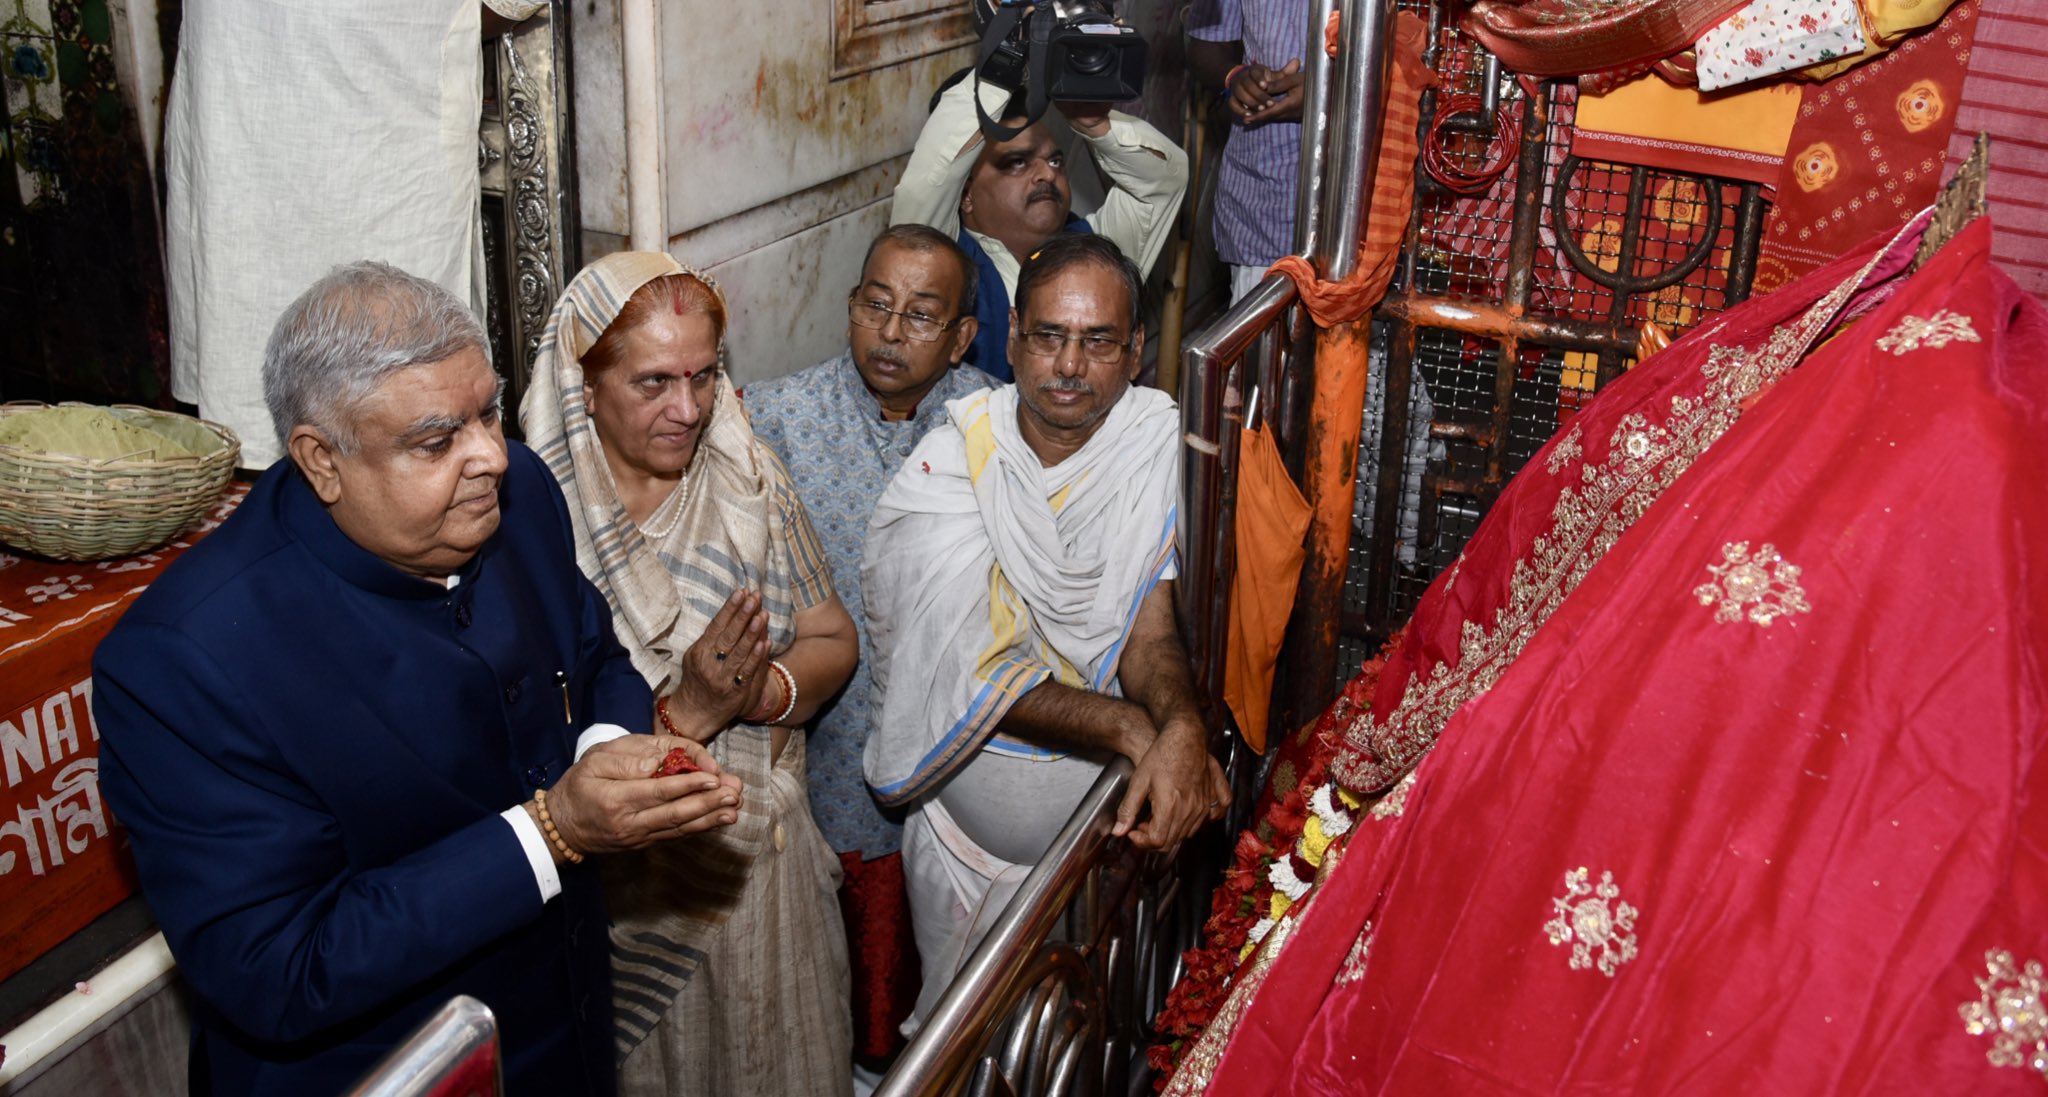 The Vice President, Shri Jagdeep Dhankhar along with his spouse, Dr Sudesh Dhankhar offering prayers at the Kalighat Kali Temple in Kolkata on 29 November 2022